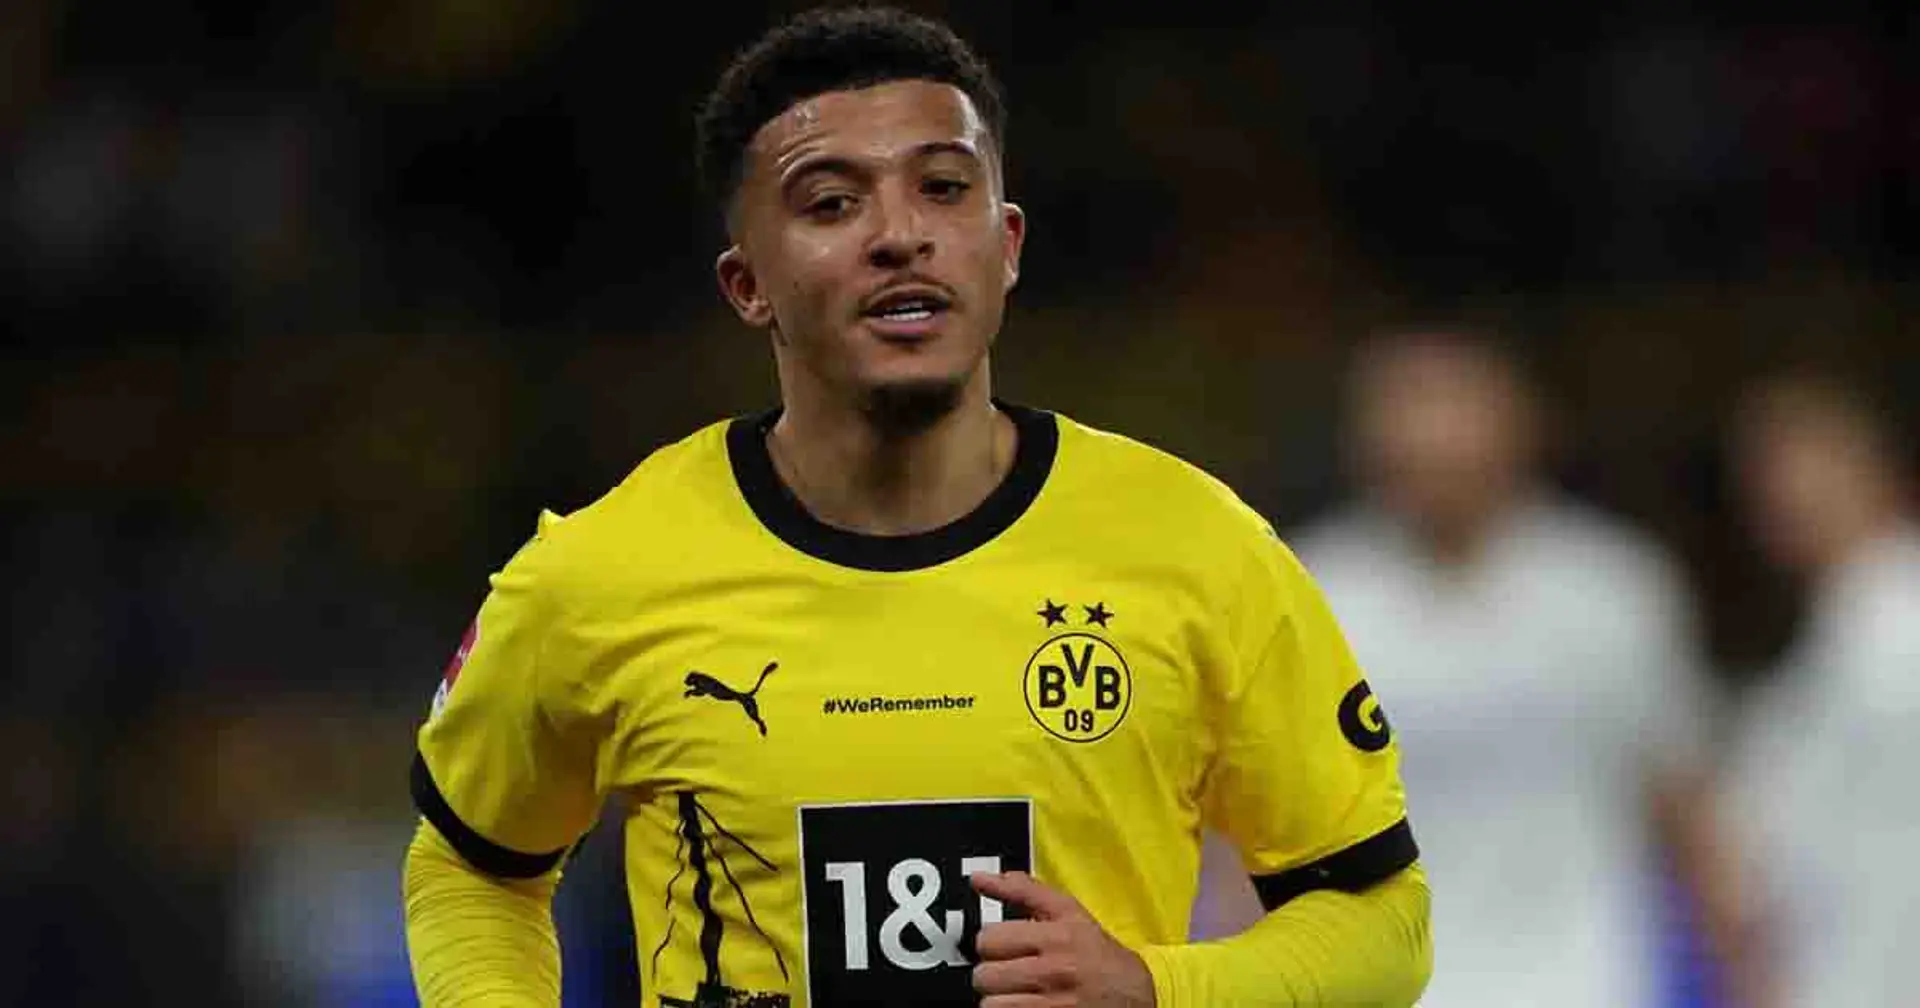 'Worst player’: German media criticize Sancho's performance in Borussia Dortmund’s recent loss